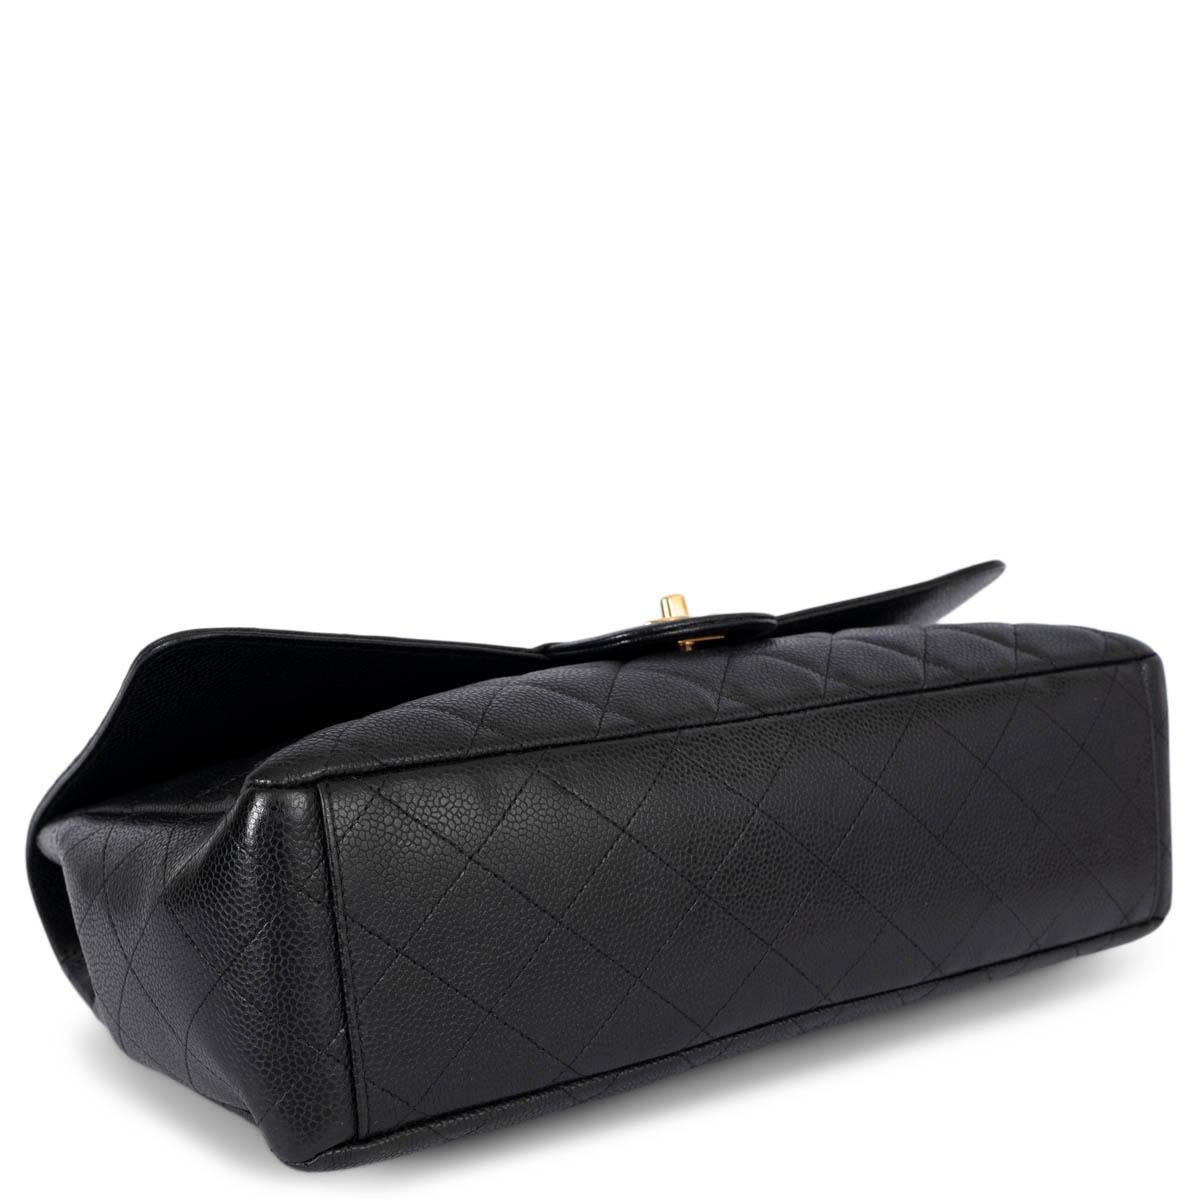 CHANEL black Caviar leather CLASSIC MAXI SINGLE FLAP Shoulder Bag For Sale 1